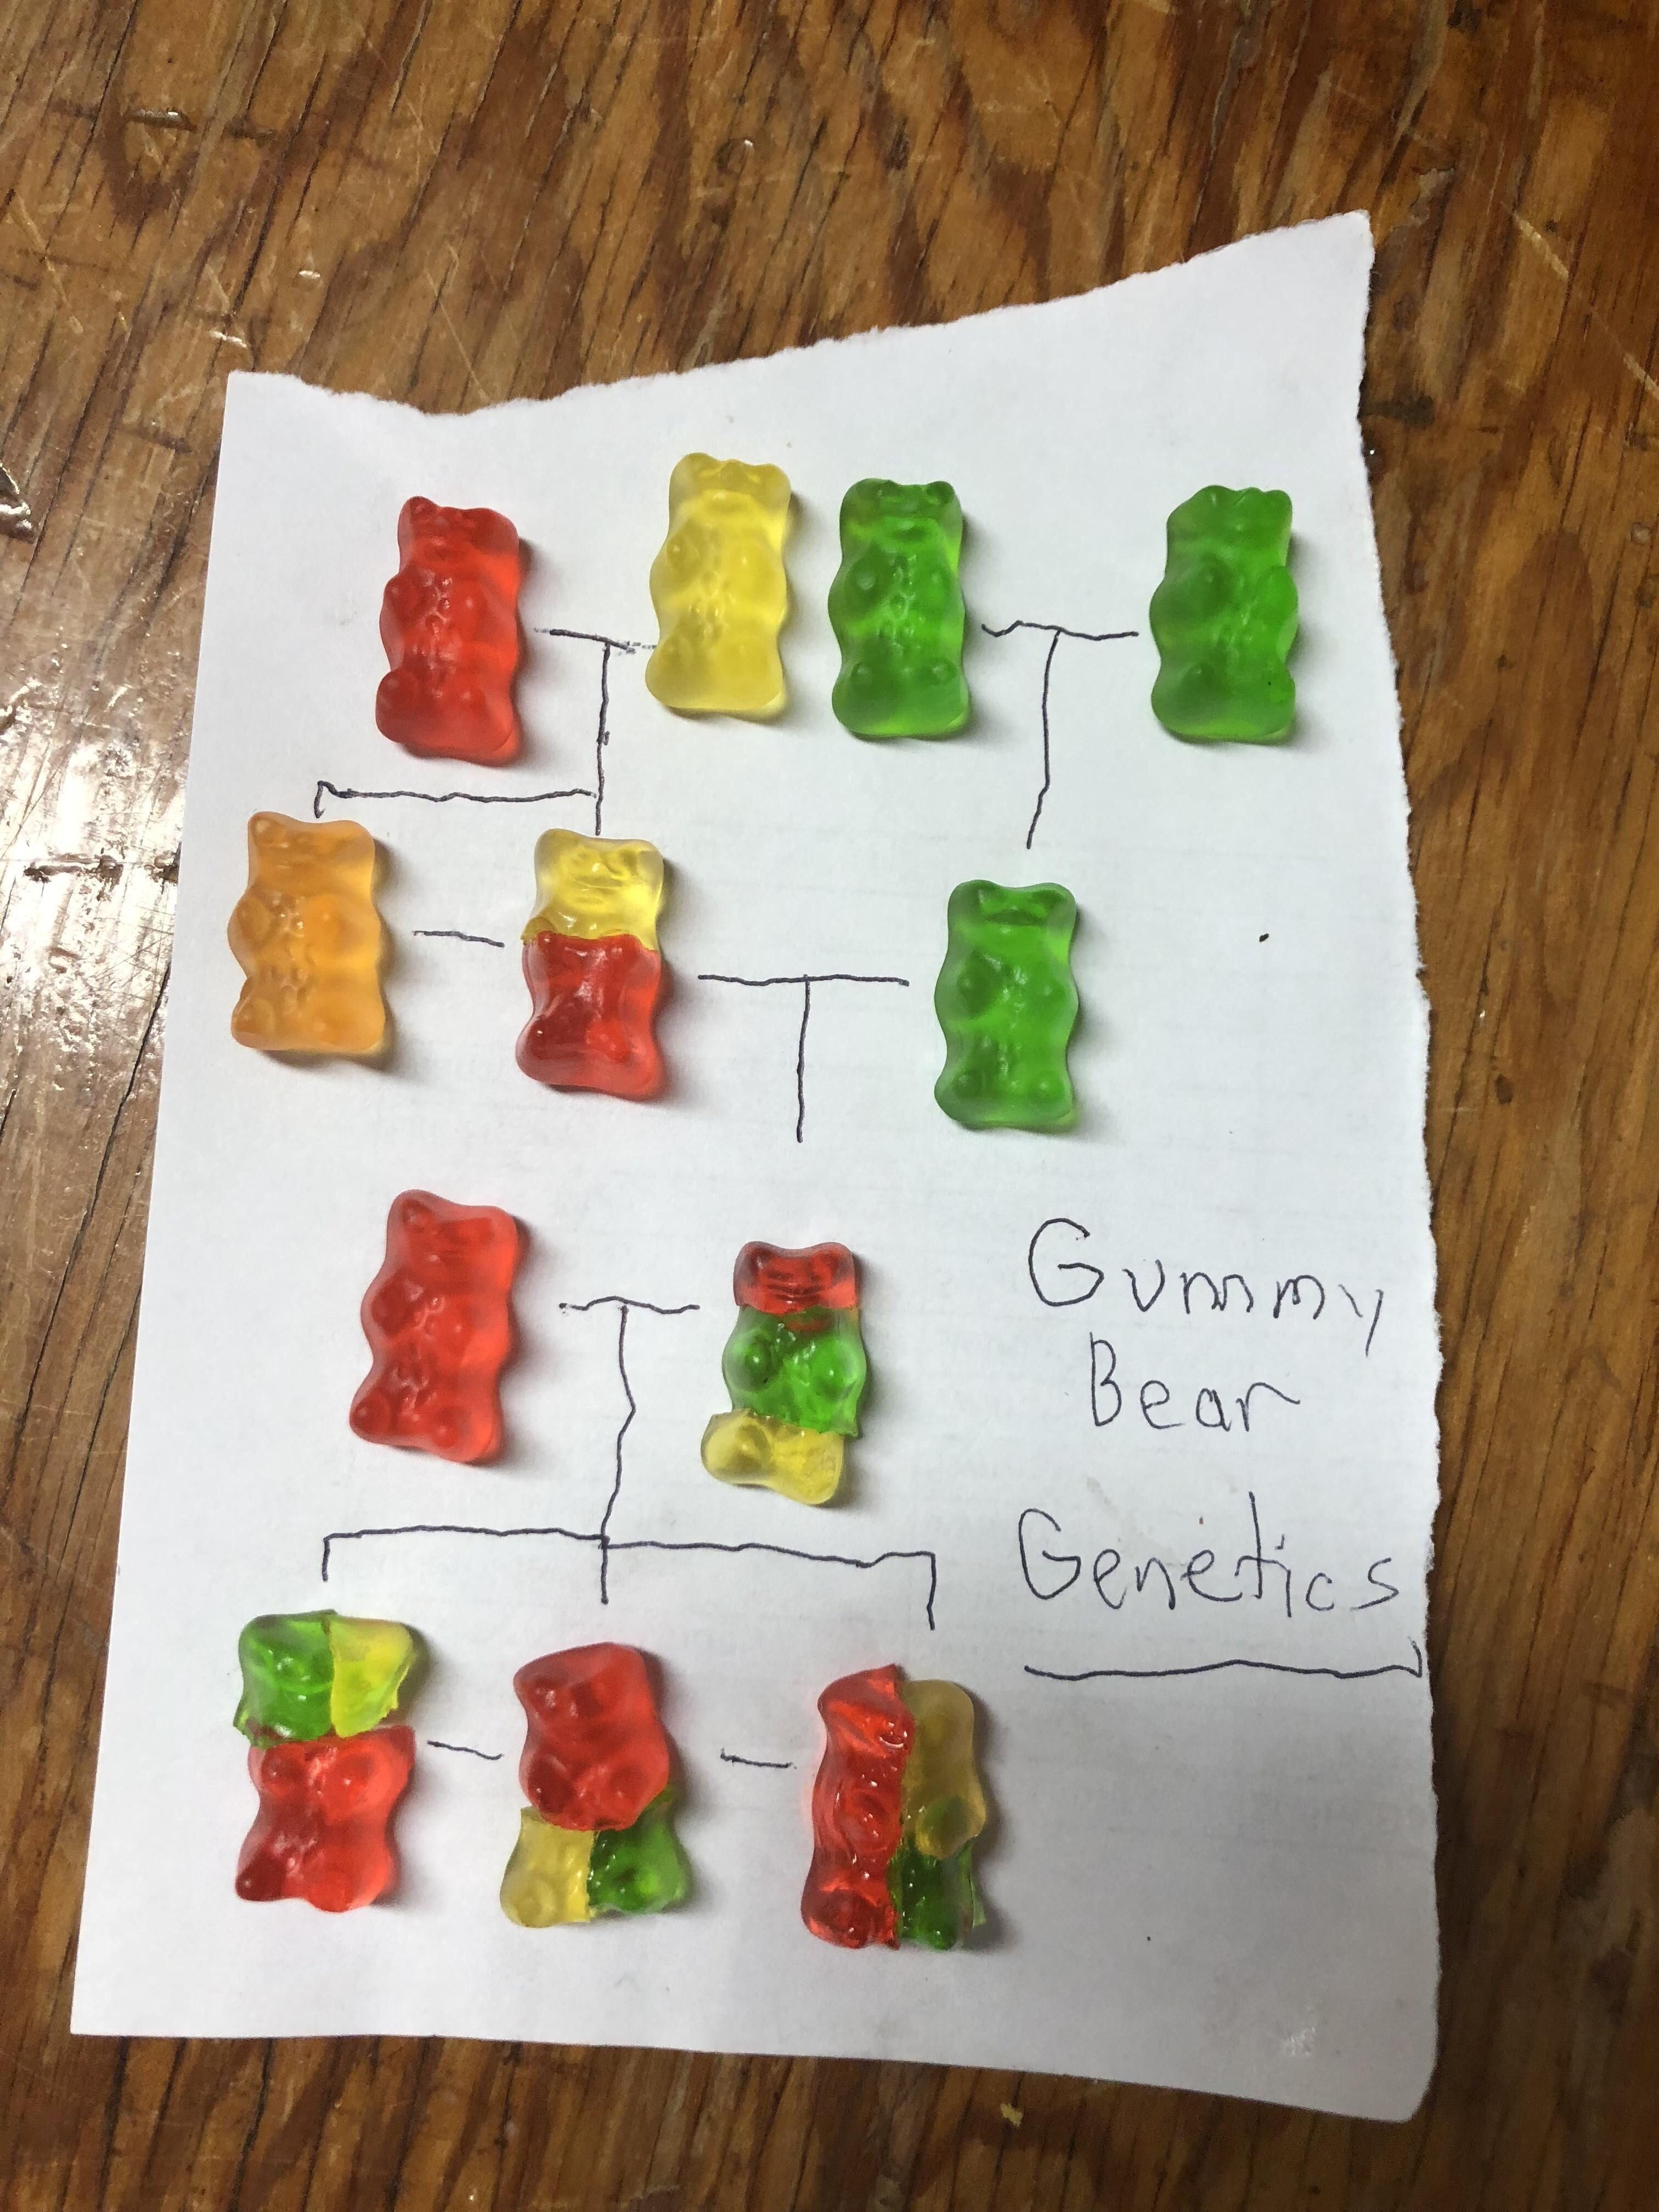 Gummy bear genetics